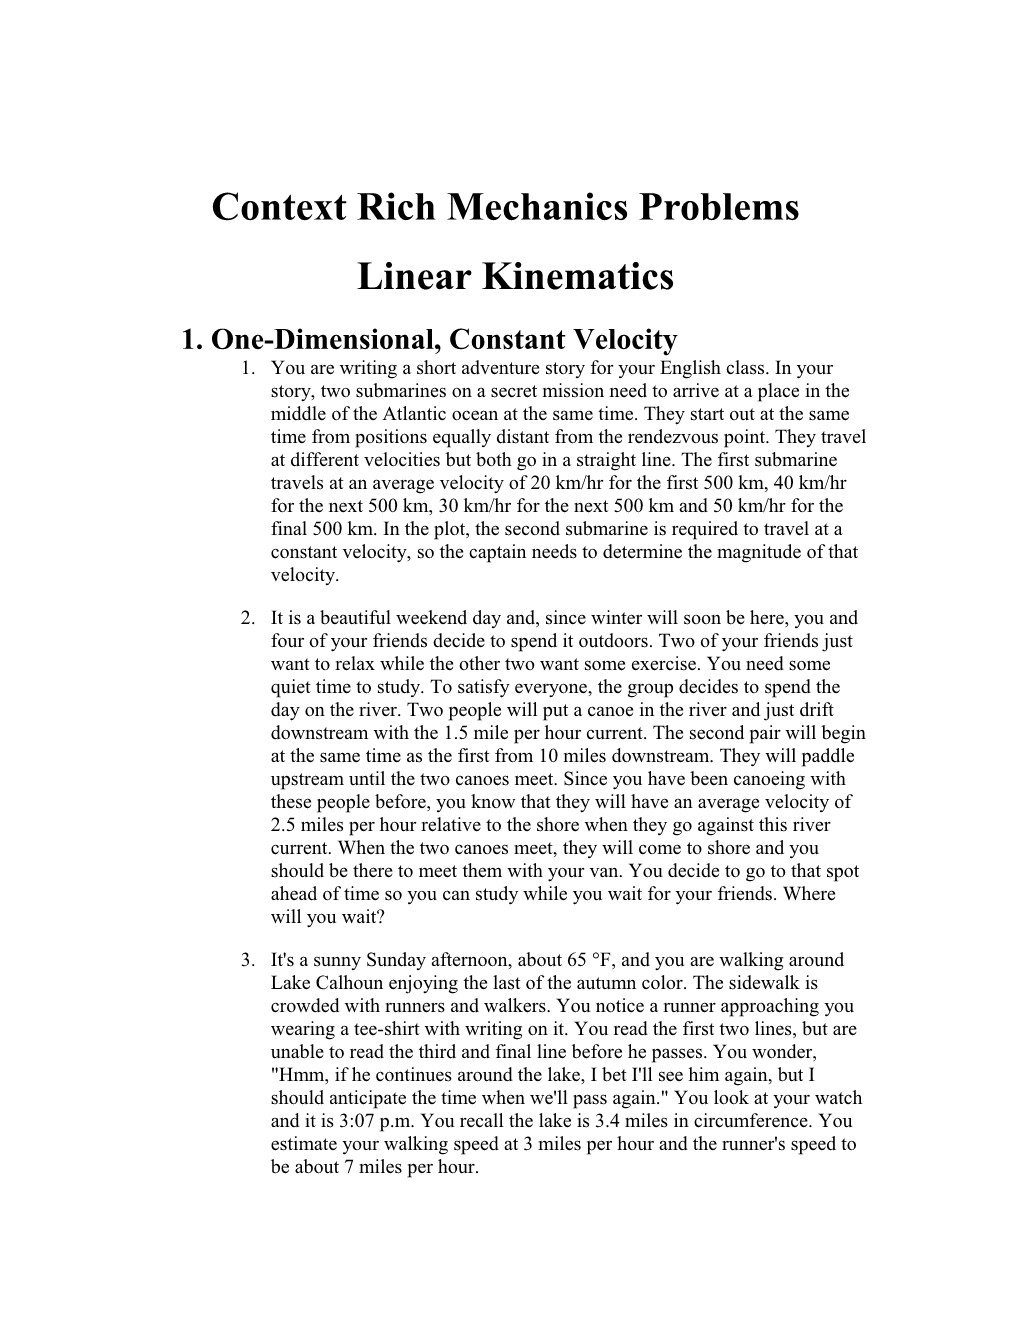 Mechanics Problems - Linear Kinematics